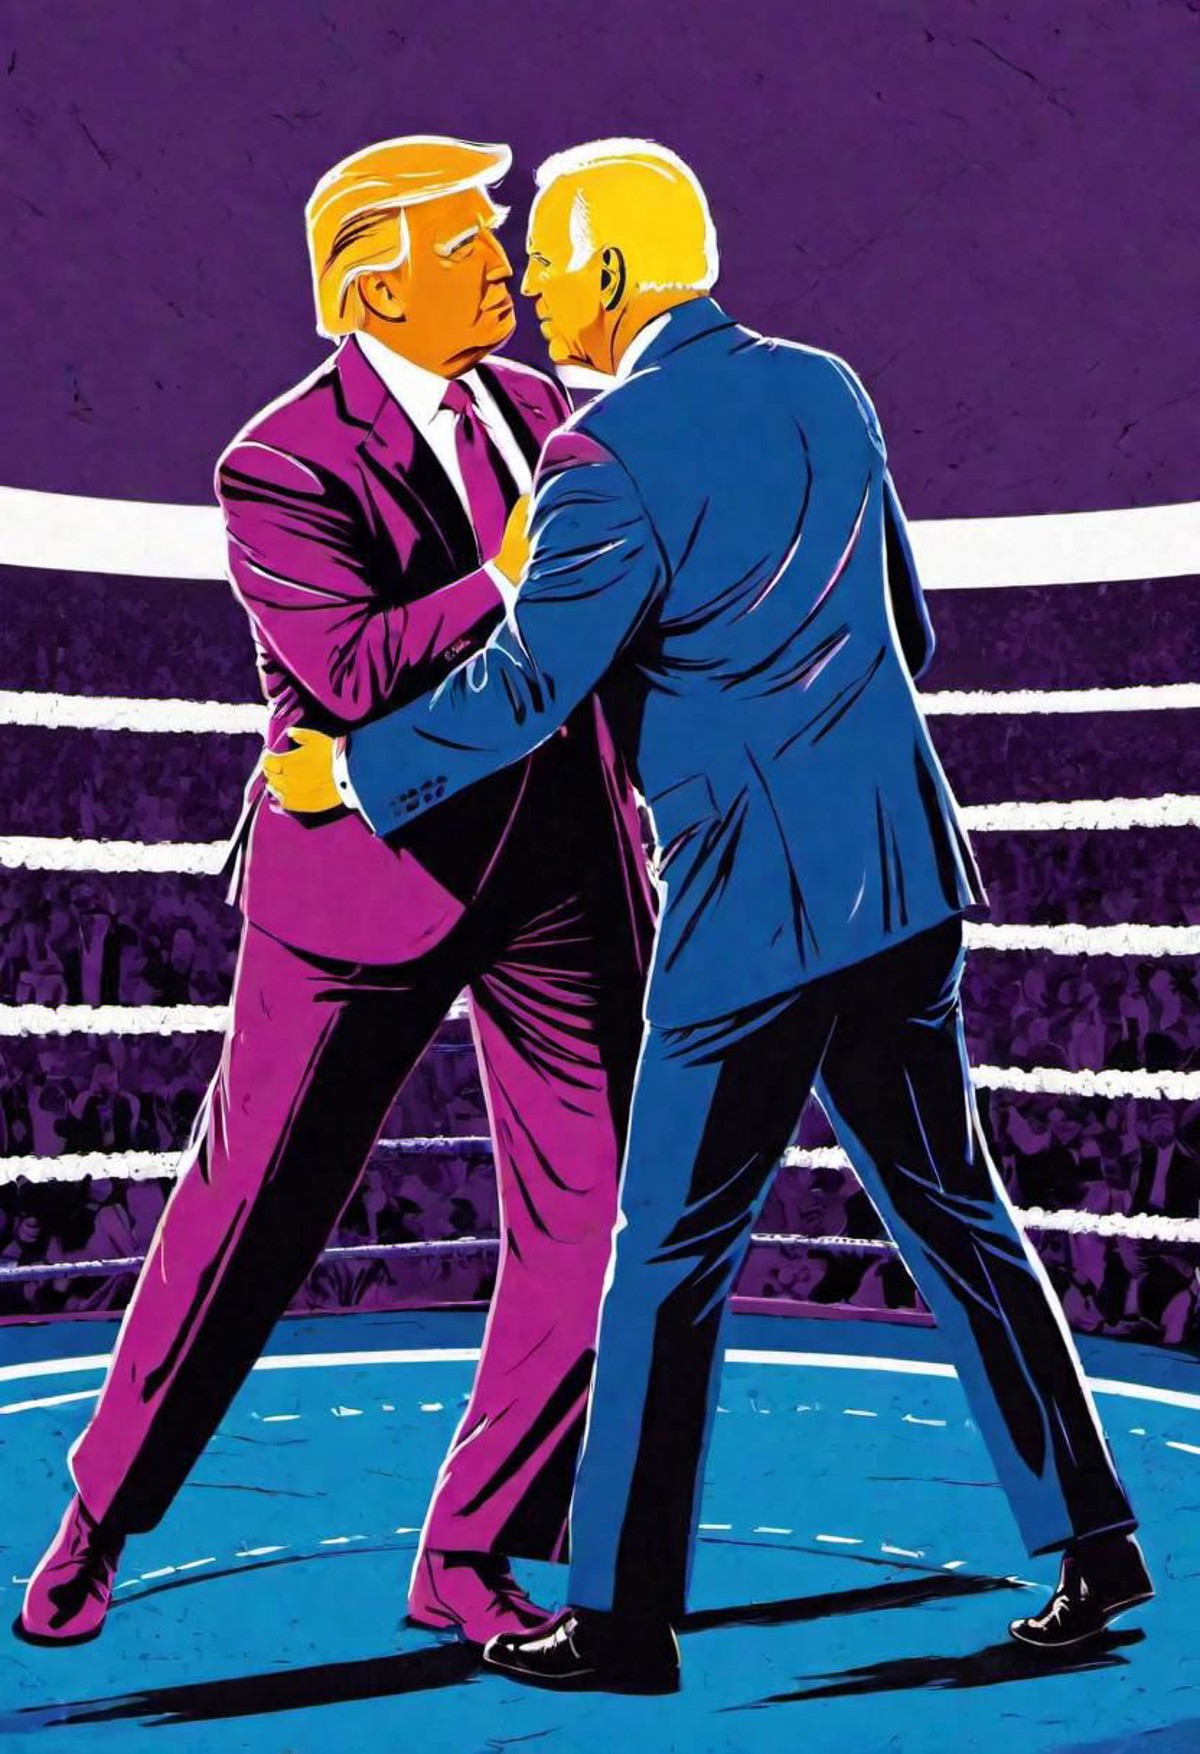 Donald Trump wrestling with Joe Biden, stadium. Digital artwork, bold lines, vibrant, saturated colors